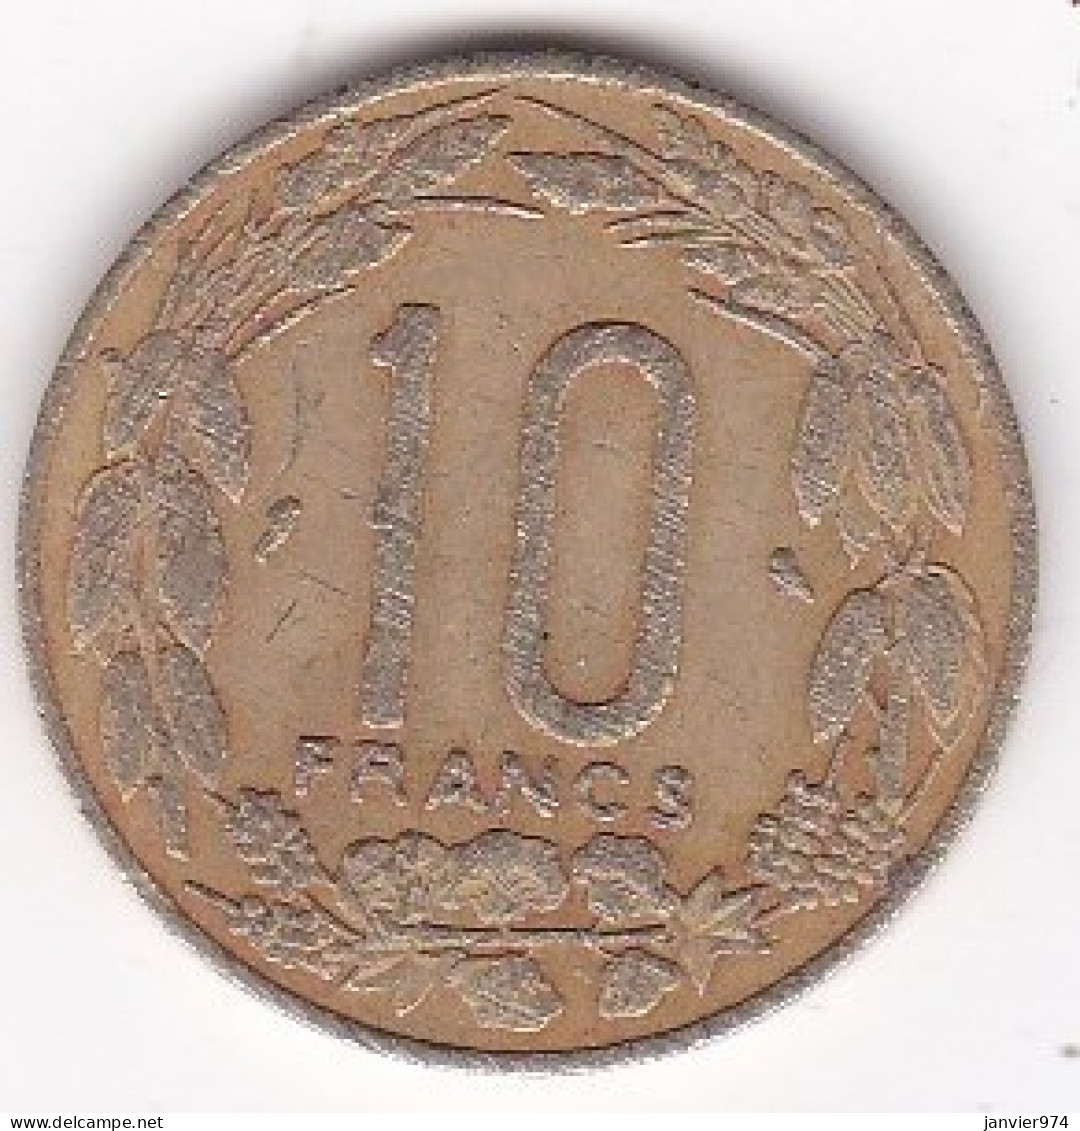 Cameroun, Afrique Equatoriale , 10 FRANCS 1969, Bronze Nickel Aluminium. KM# 2a - Kamerun